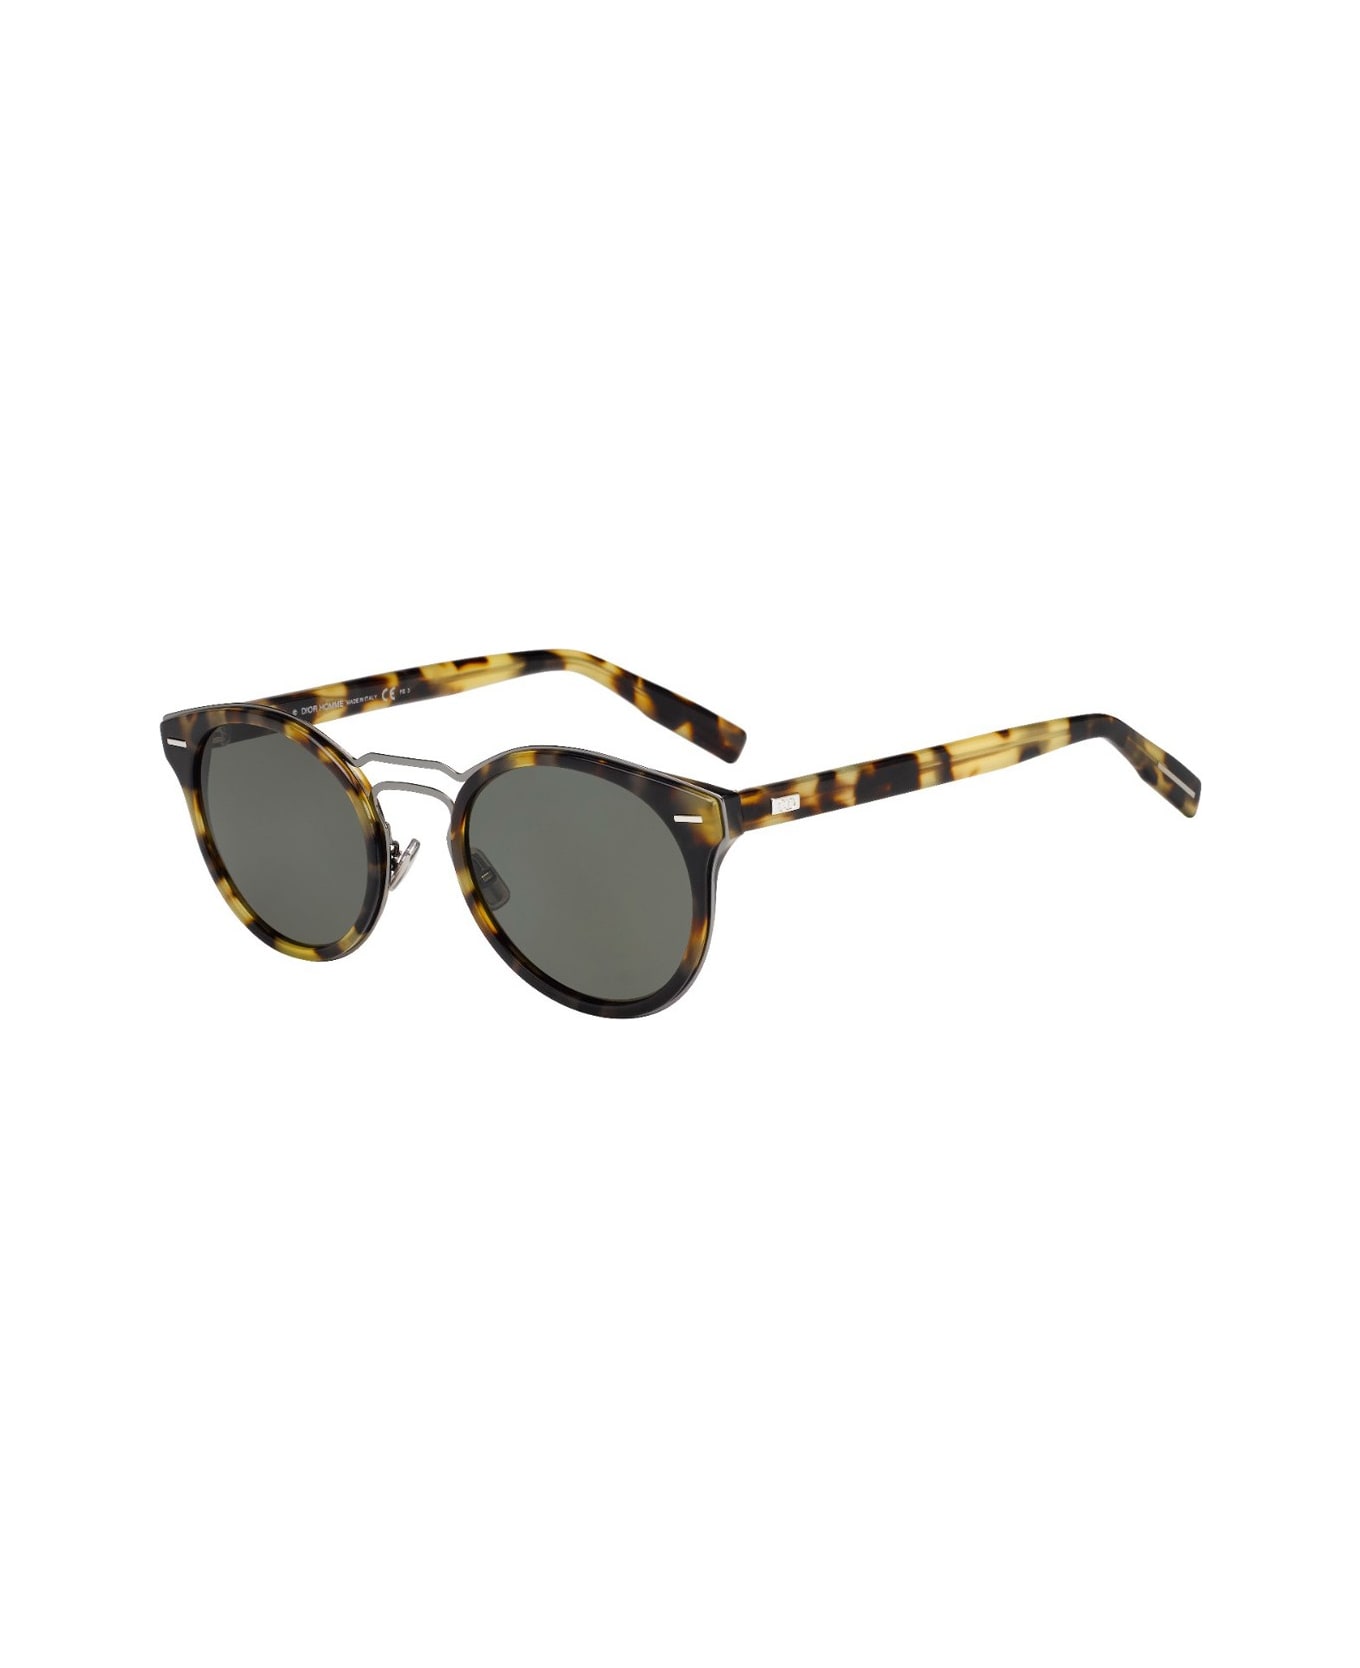 Dior Eyewear 0209s Sunglasses - Marrone